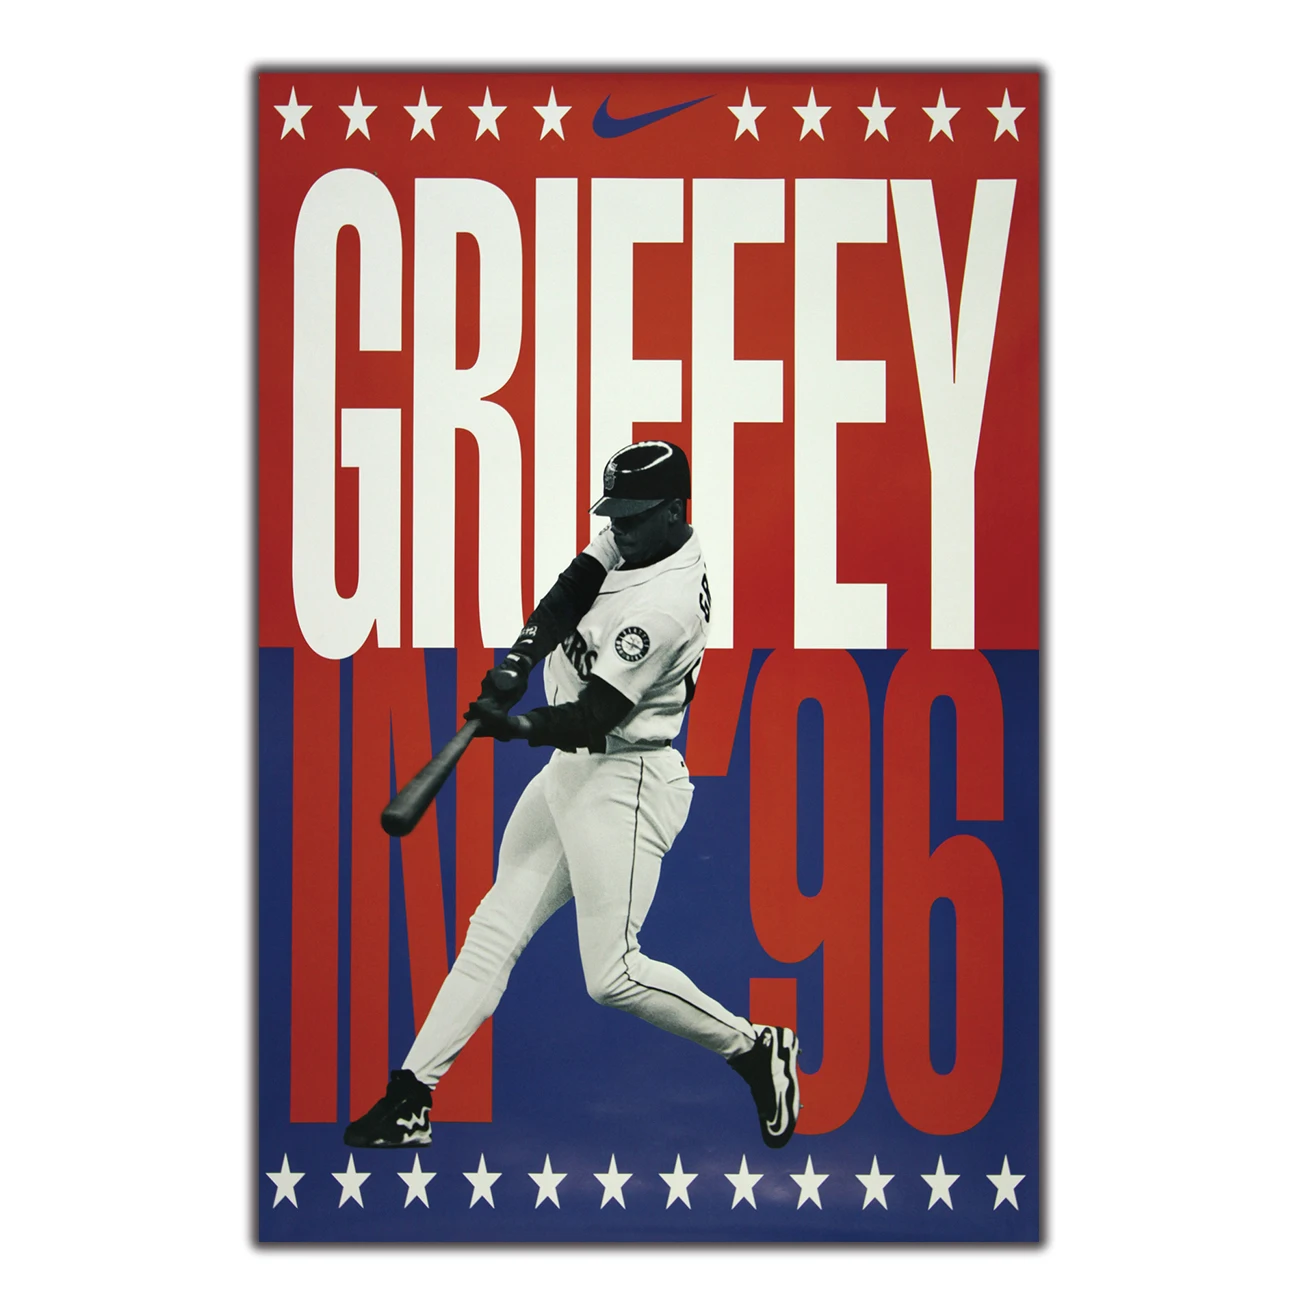 Ken Griffey Jr Baseball Art Silk Poster Prints Home Wall Decor 12x18 24x36inch